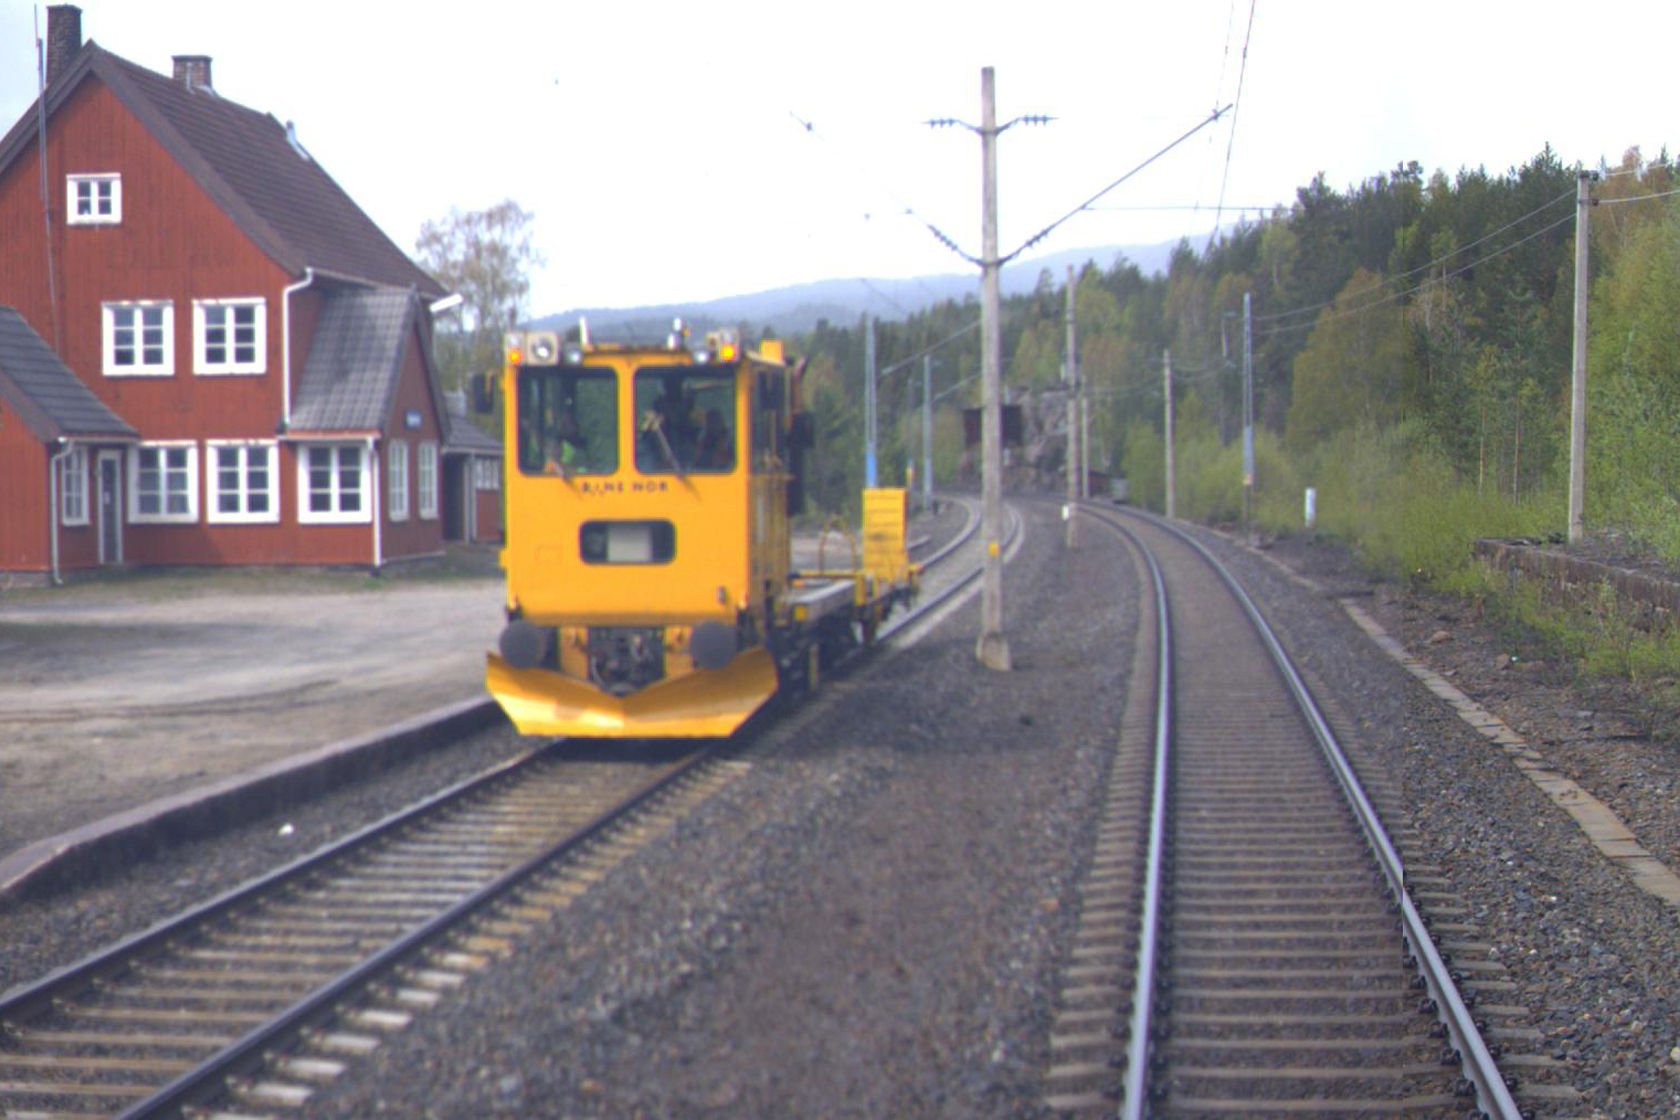 Tracks and station building at Saggrenda station